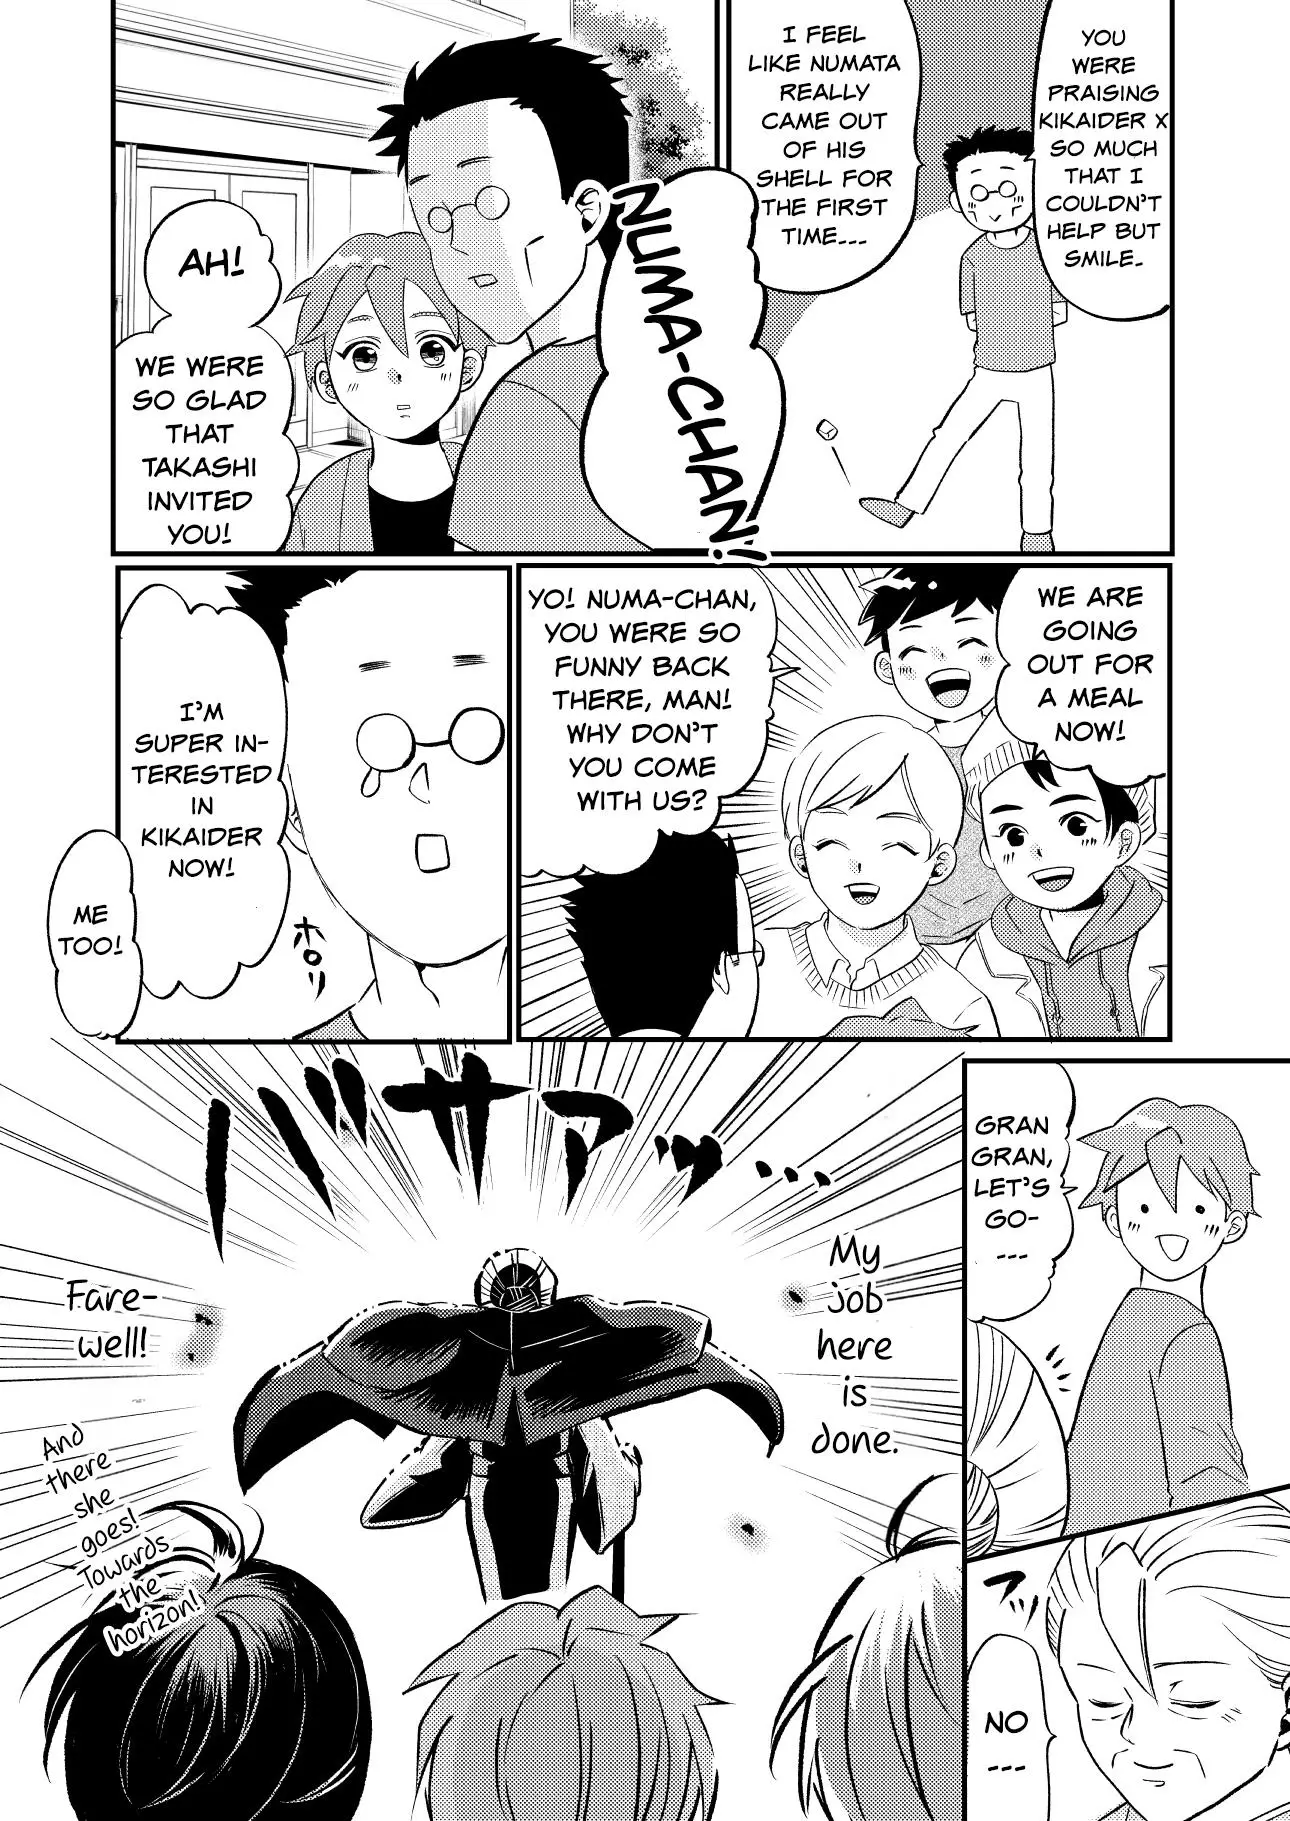 Otaku Grandma - 9 page 8-af4e978c